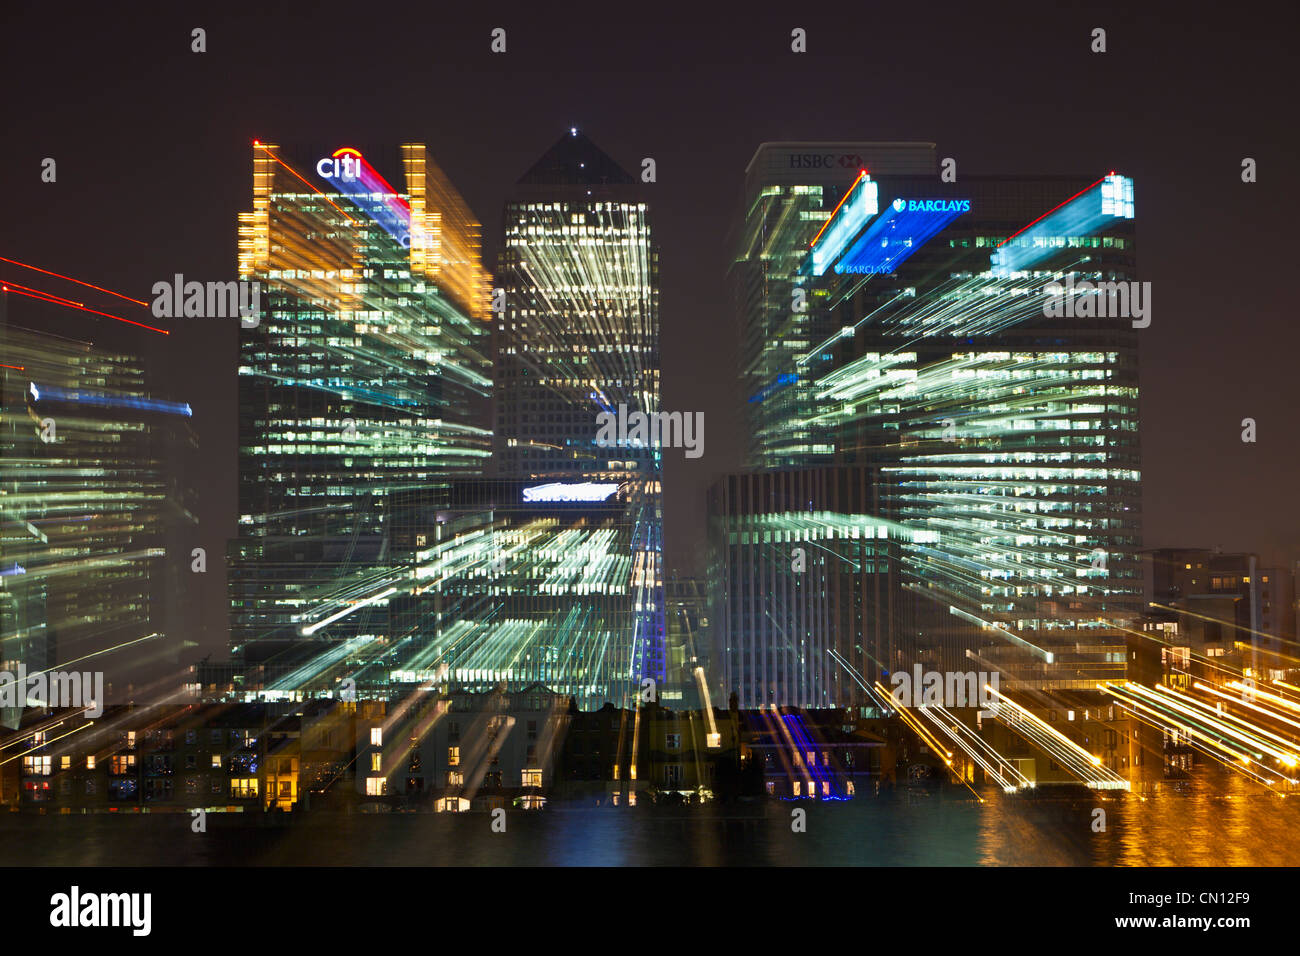 Canary Wharf Bankenviertel mit Burst Zoomeffekt, London, UK Stockfoto